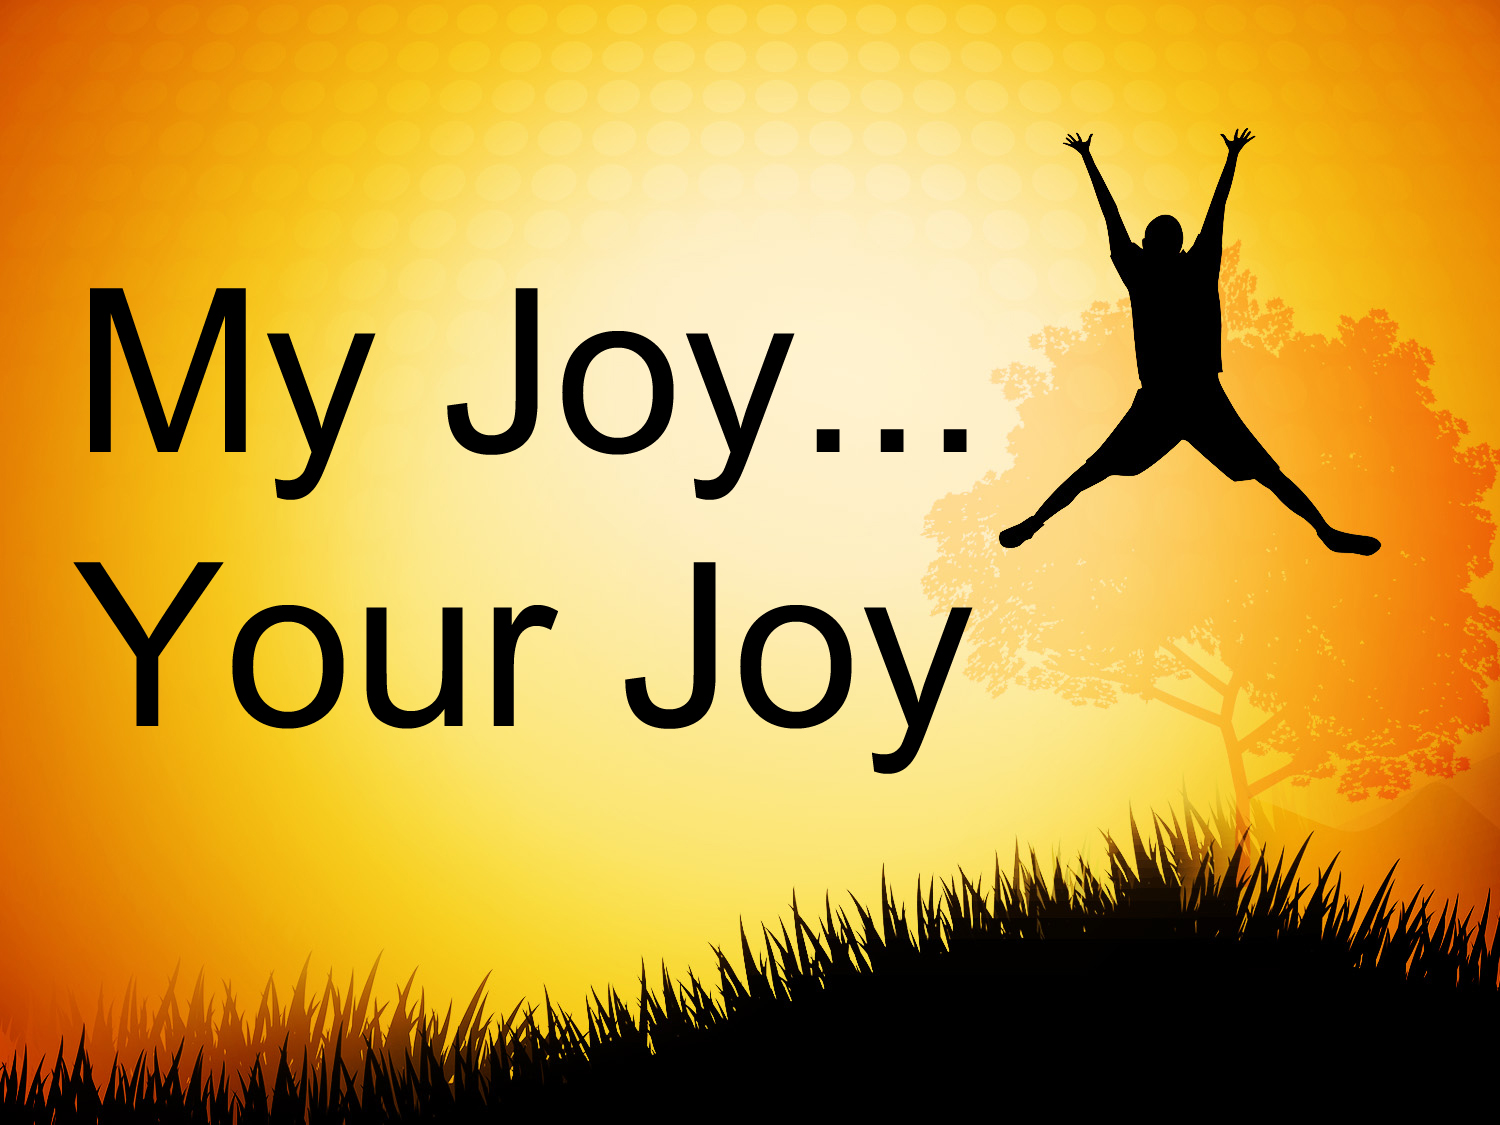 http://2.bp.blogspot.com/_aey-heP8Oyk/THztDQe6D7I/AAAAAAAAAZQ/S-CpmkSjqfk/s1600/My+Joy+-+Your+Joy.jpg